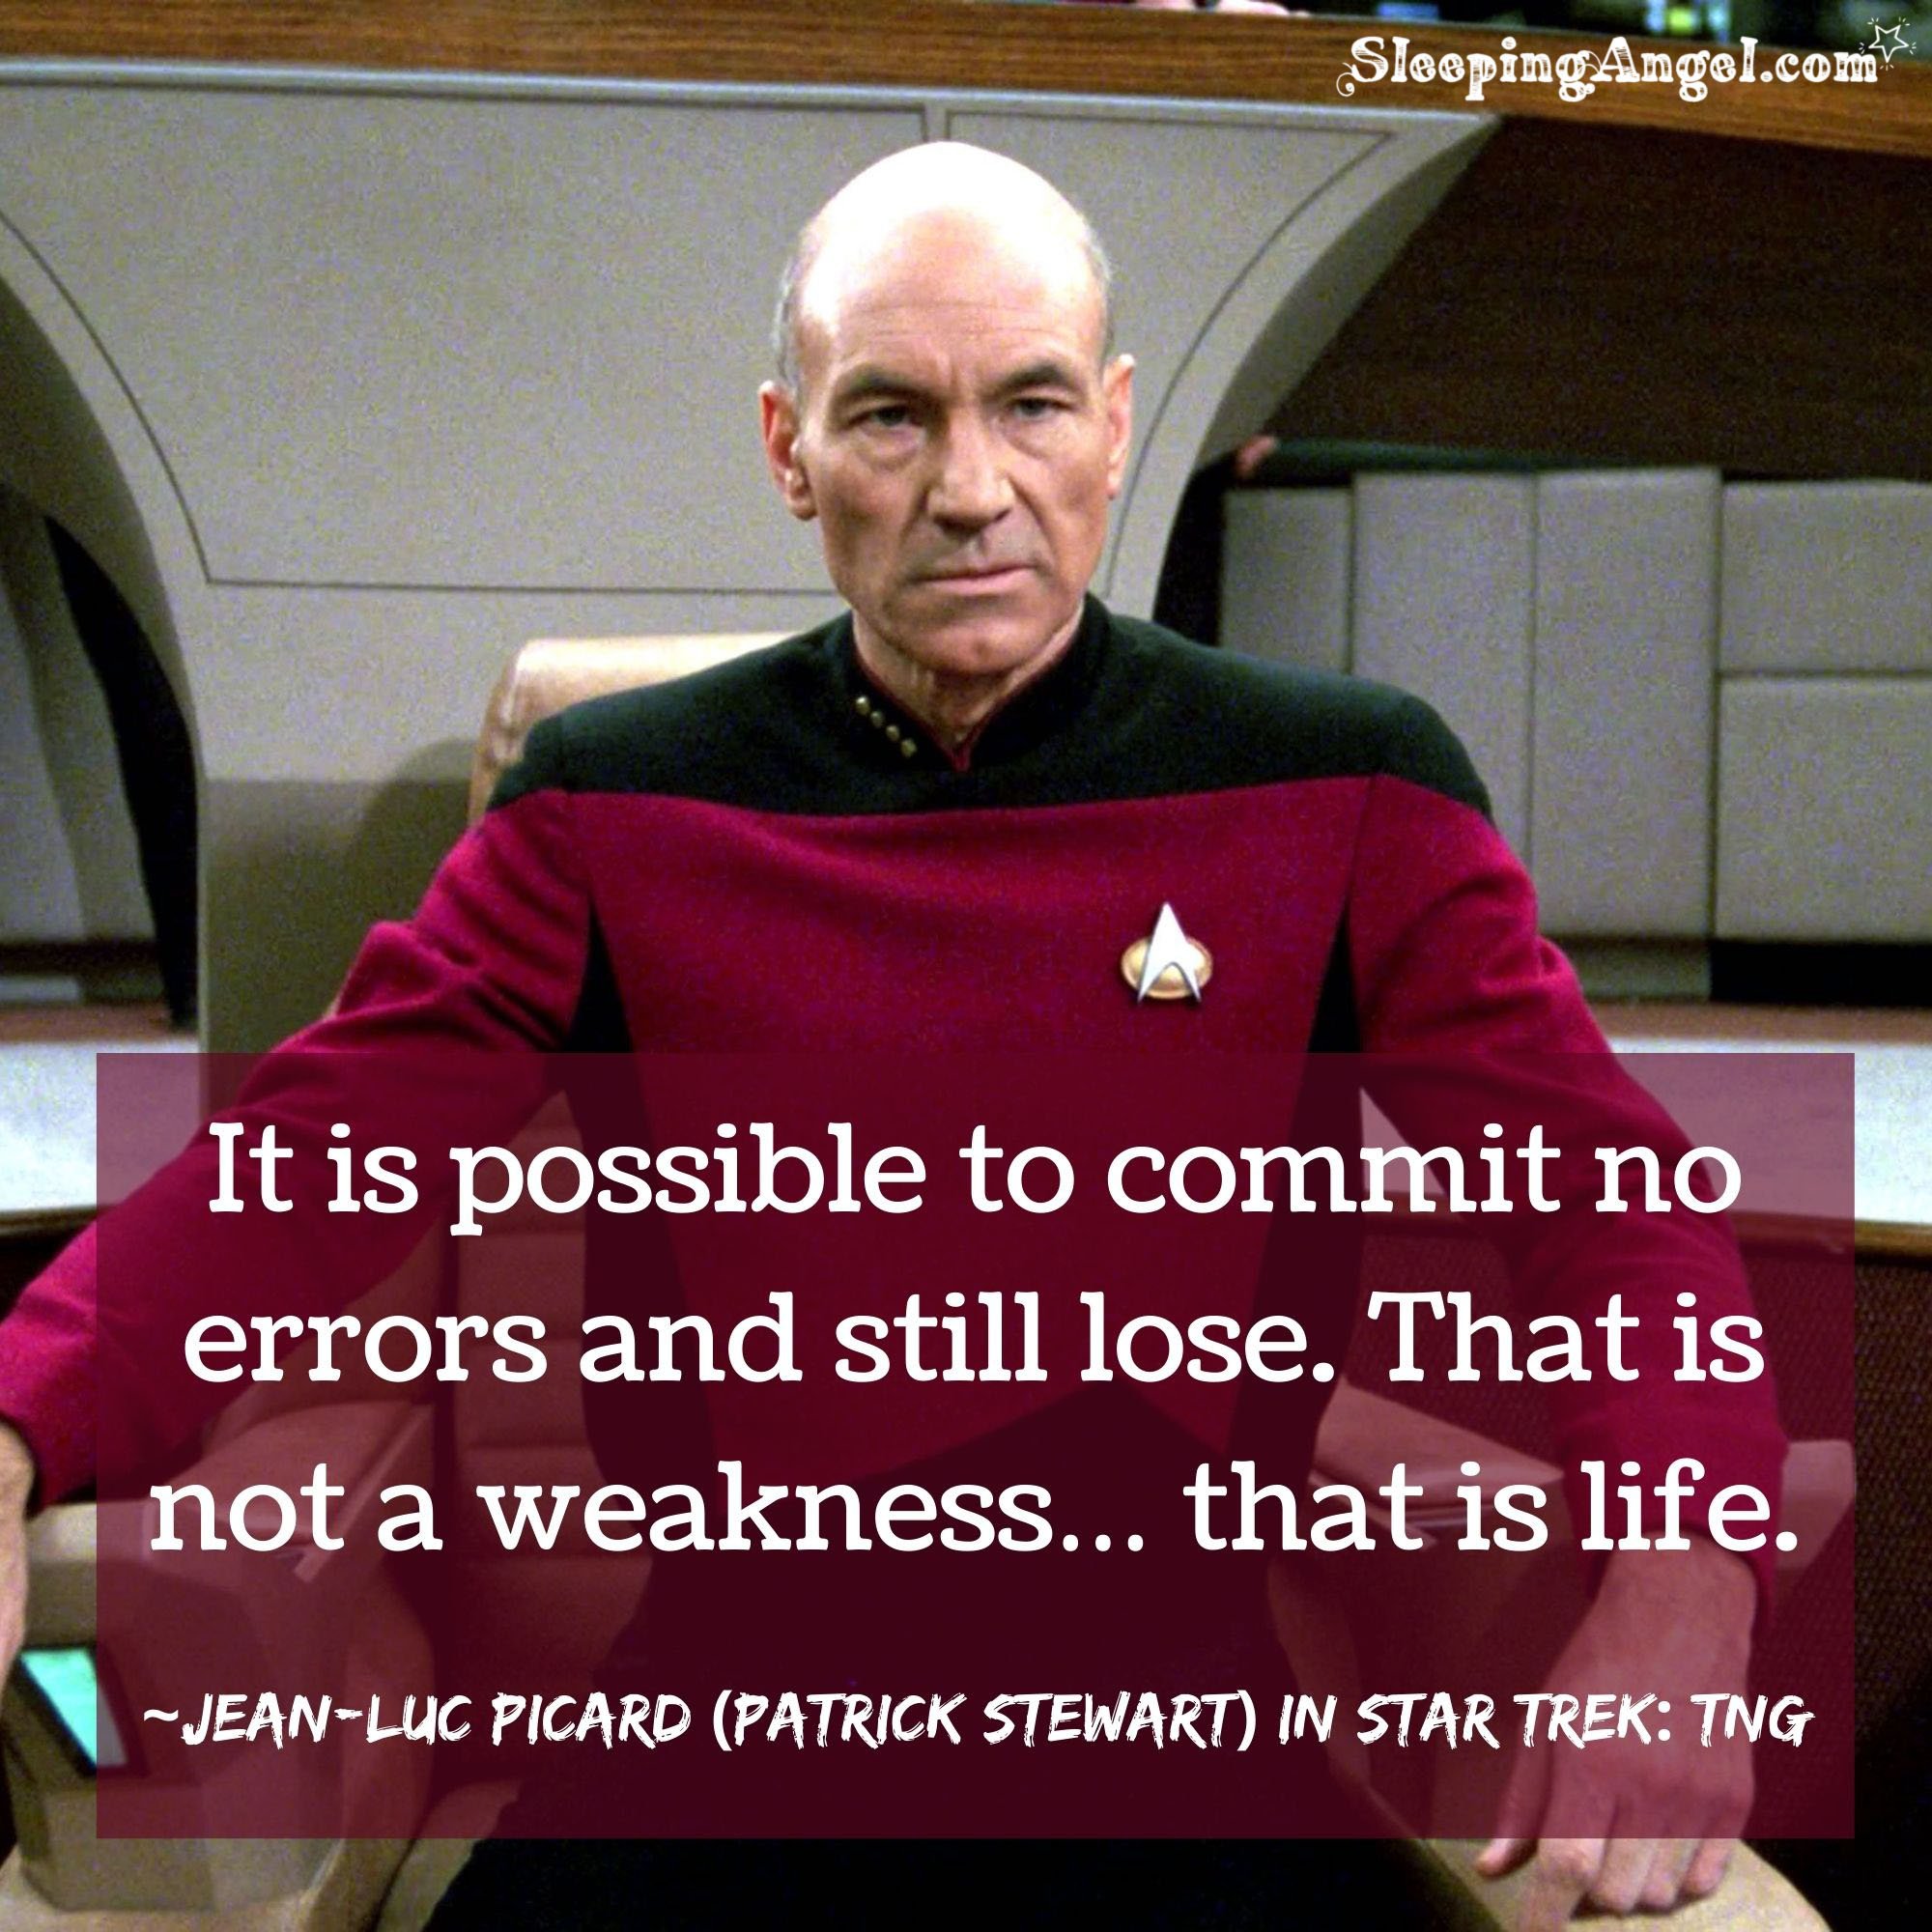 Stewart aka Picard quote.jpg